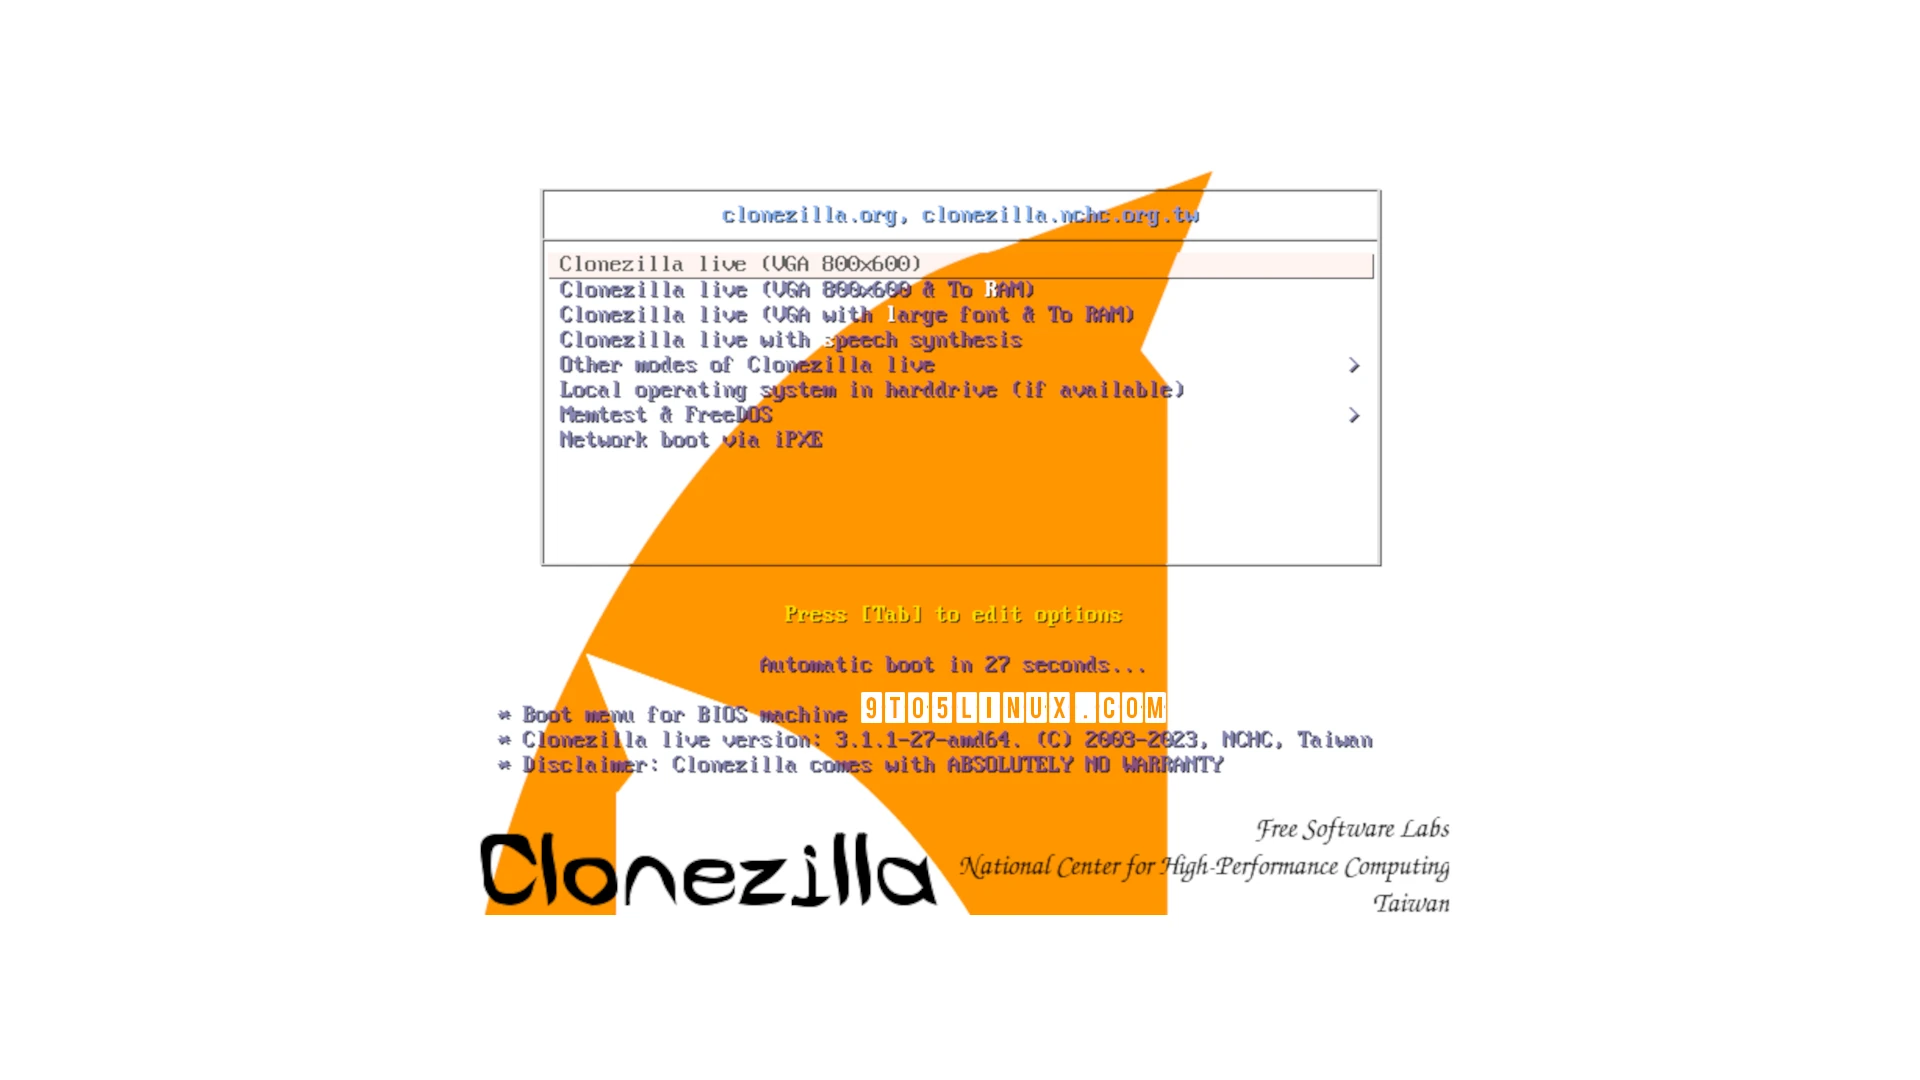 Clonezilla Live 3.1.1 Bumps Kernel to Linux 6.5, Adds Many Disk Cloning Improvements